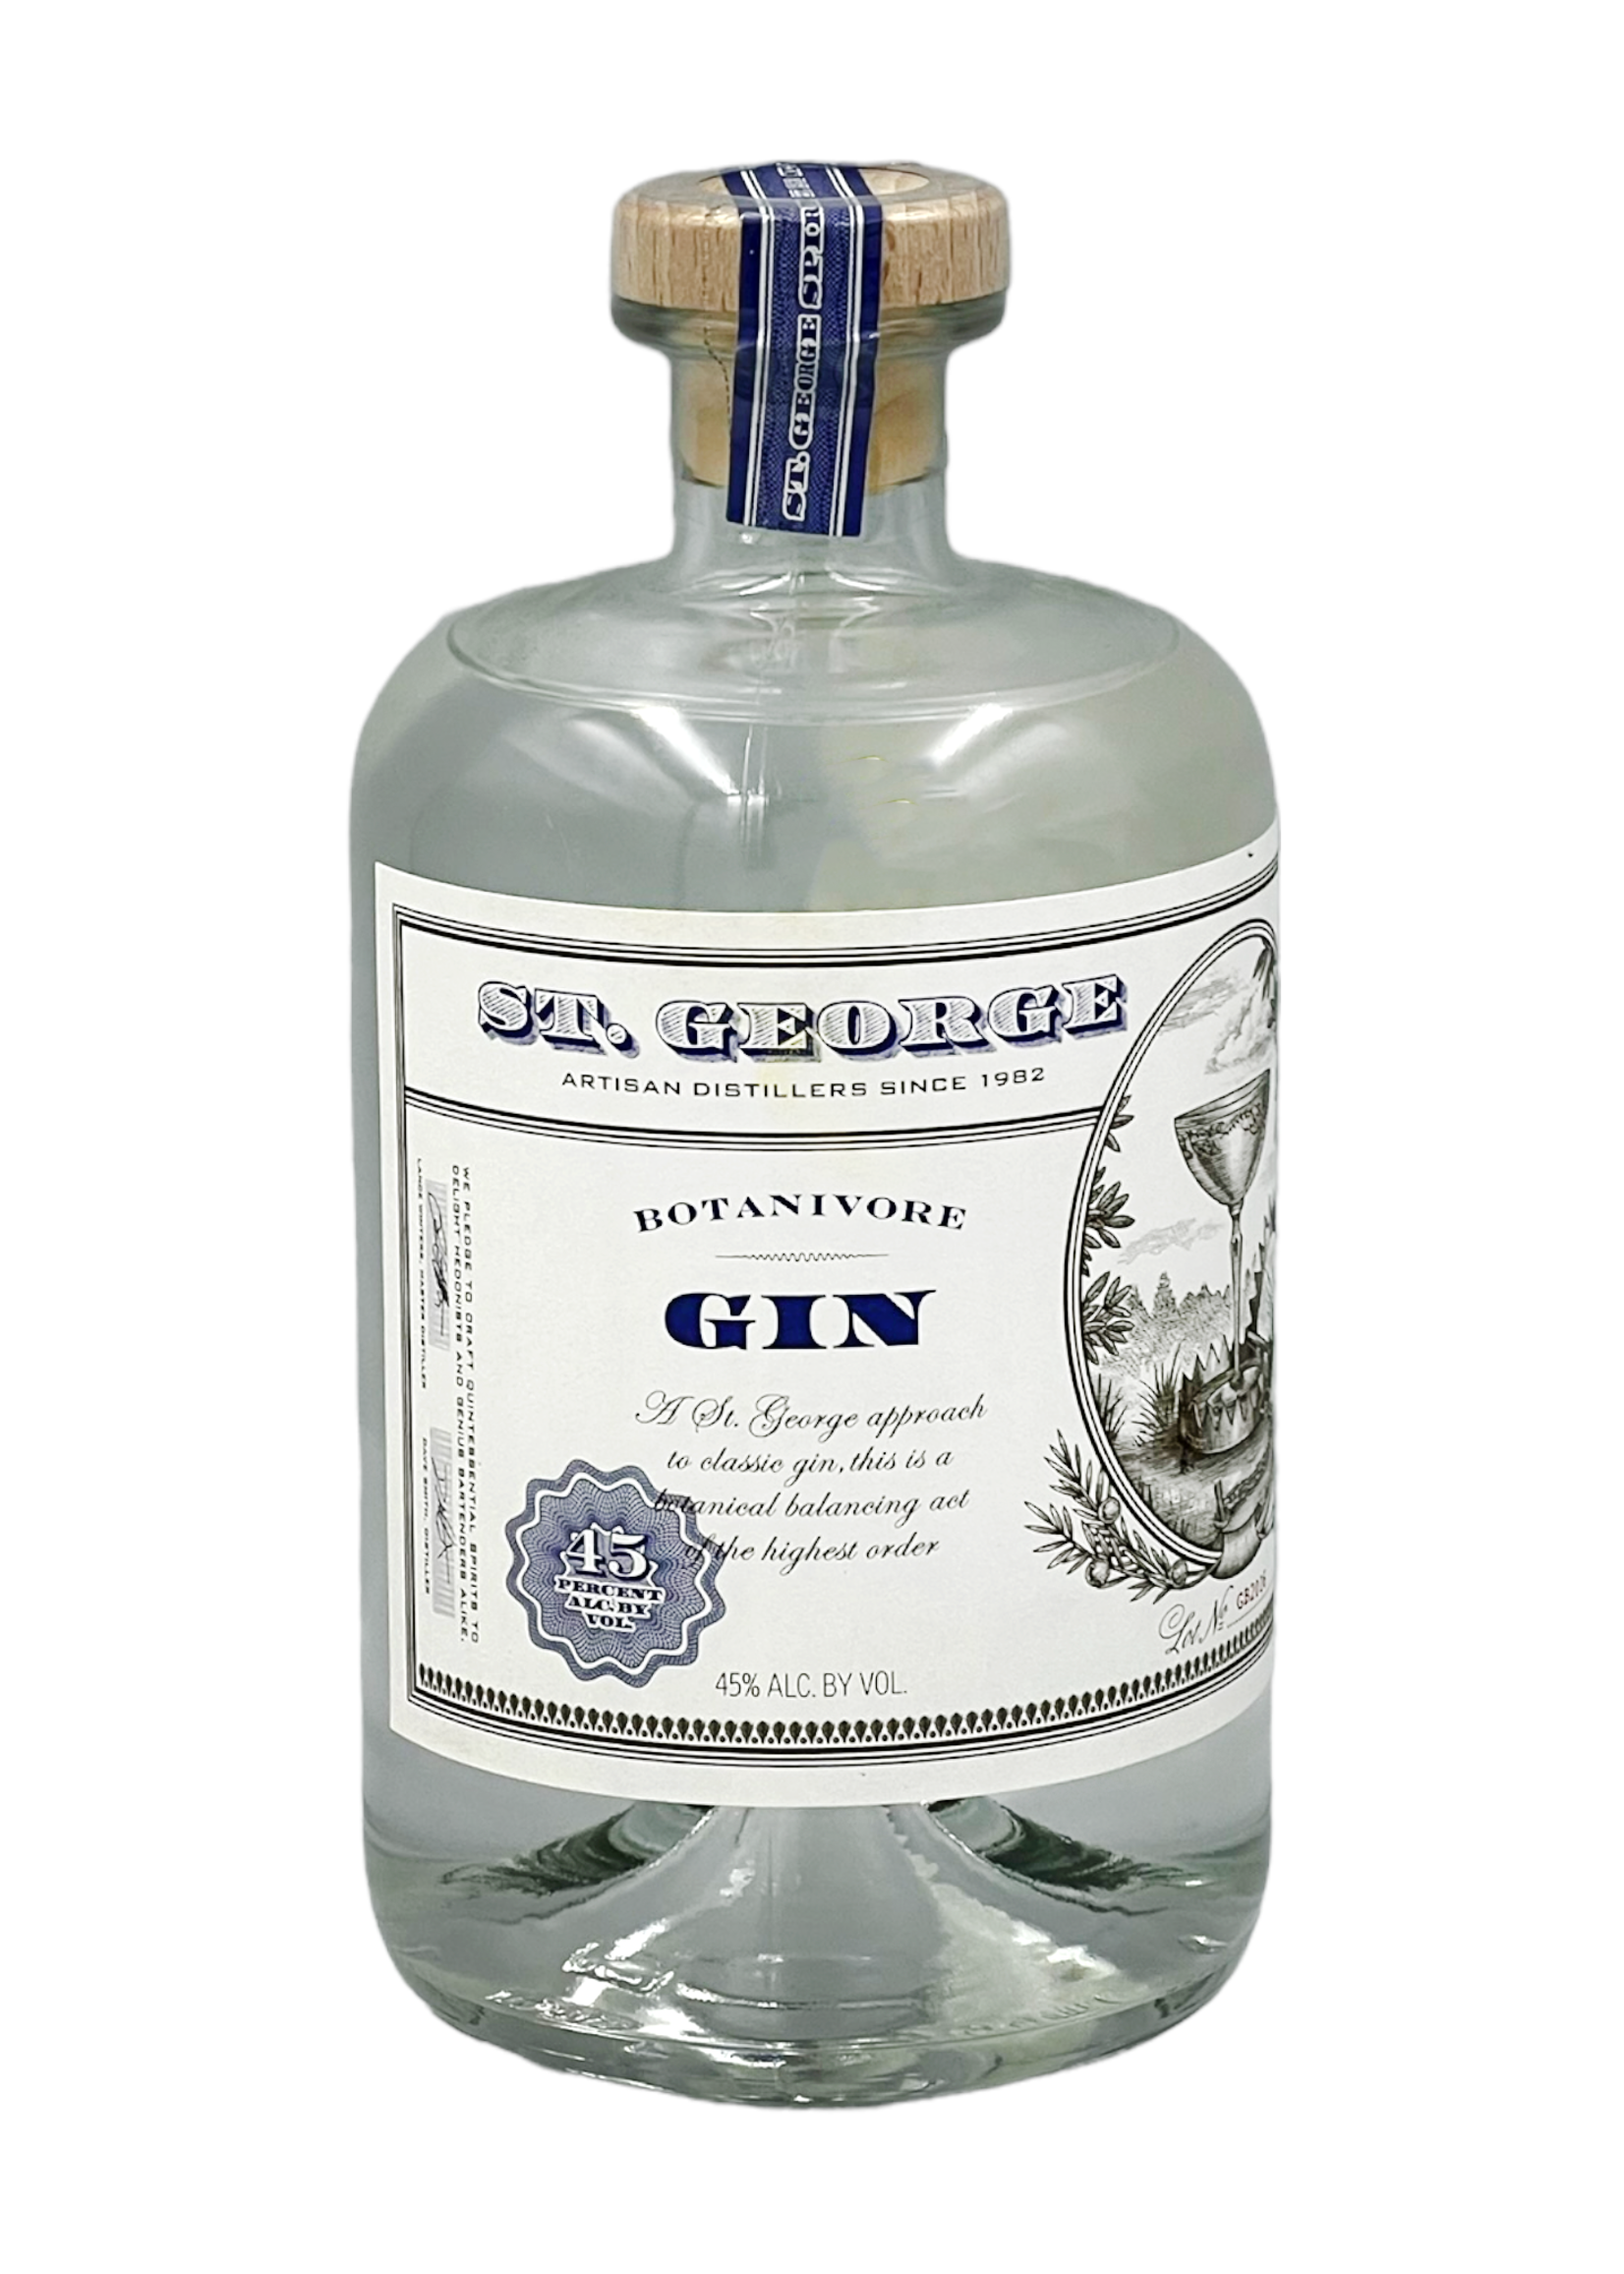 St. George Spirits Botanivore Gin 45%.-Vol. - 70cl, St. George Spirits